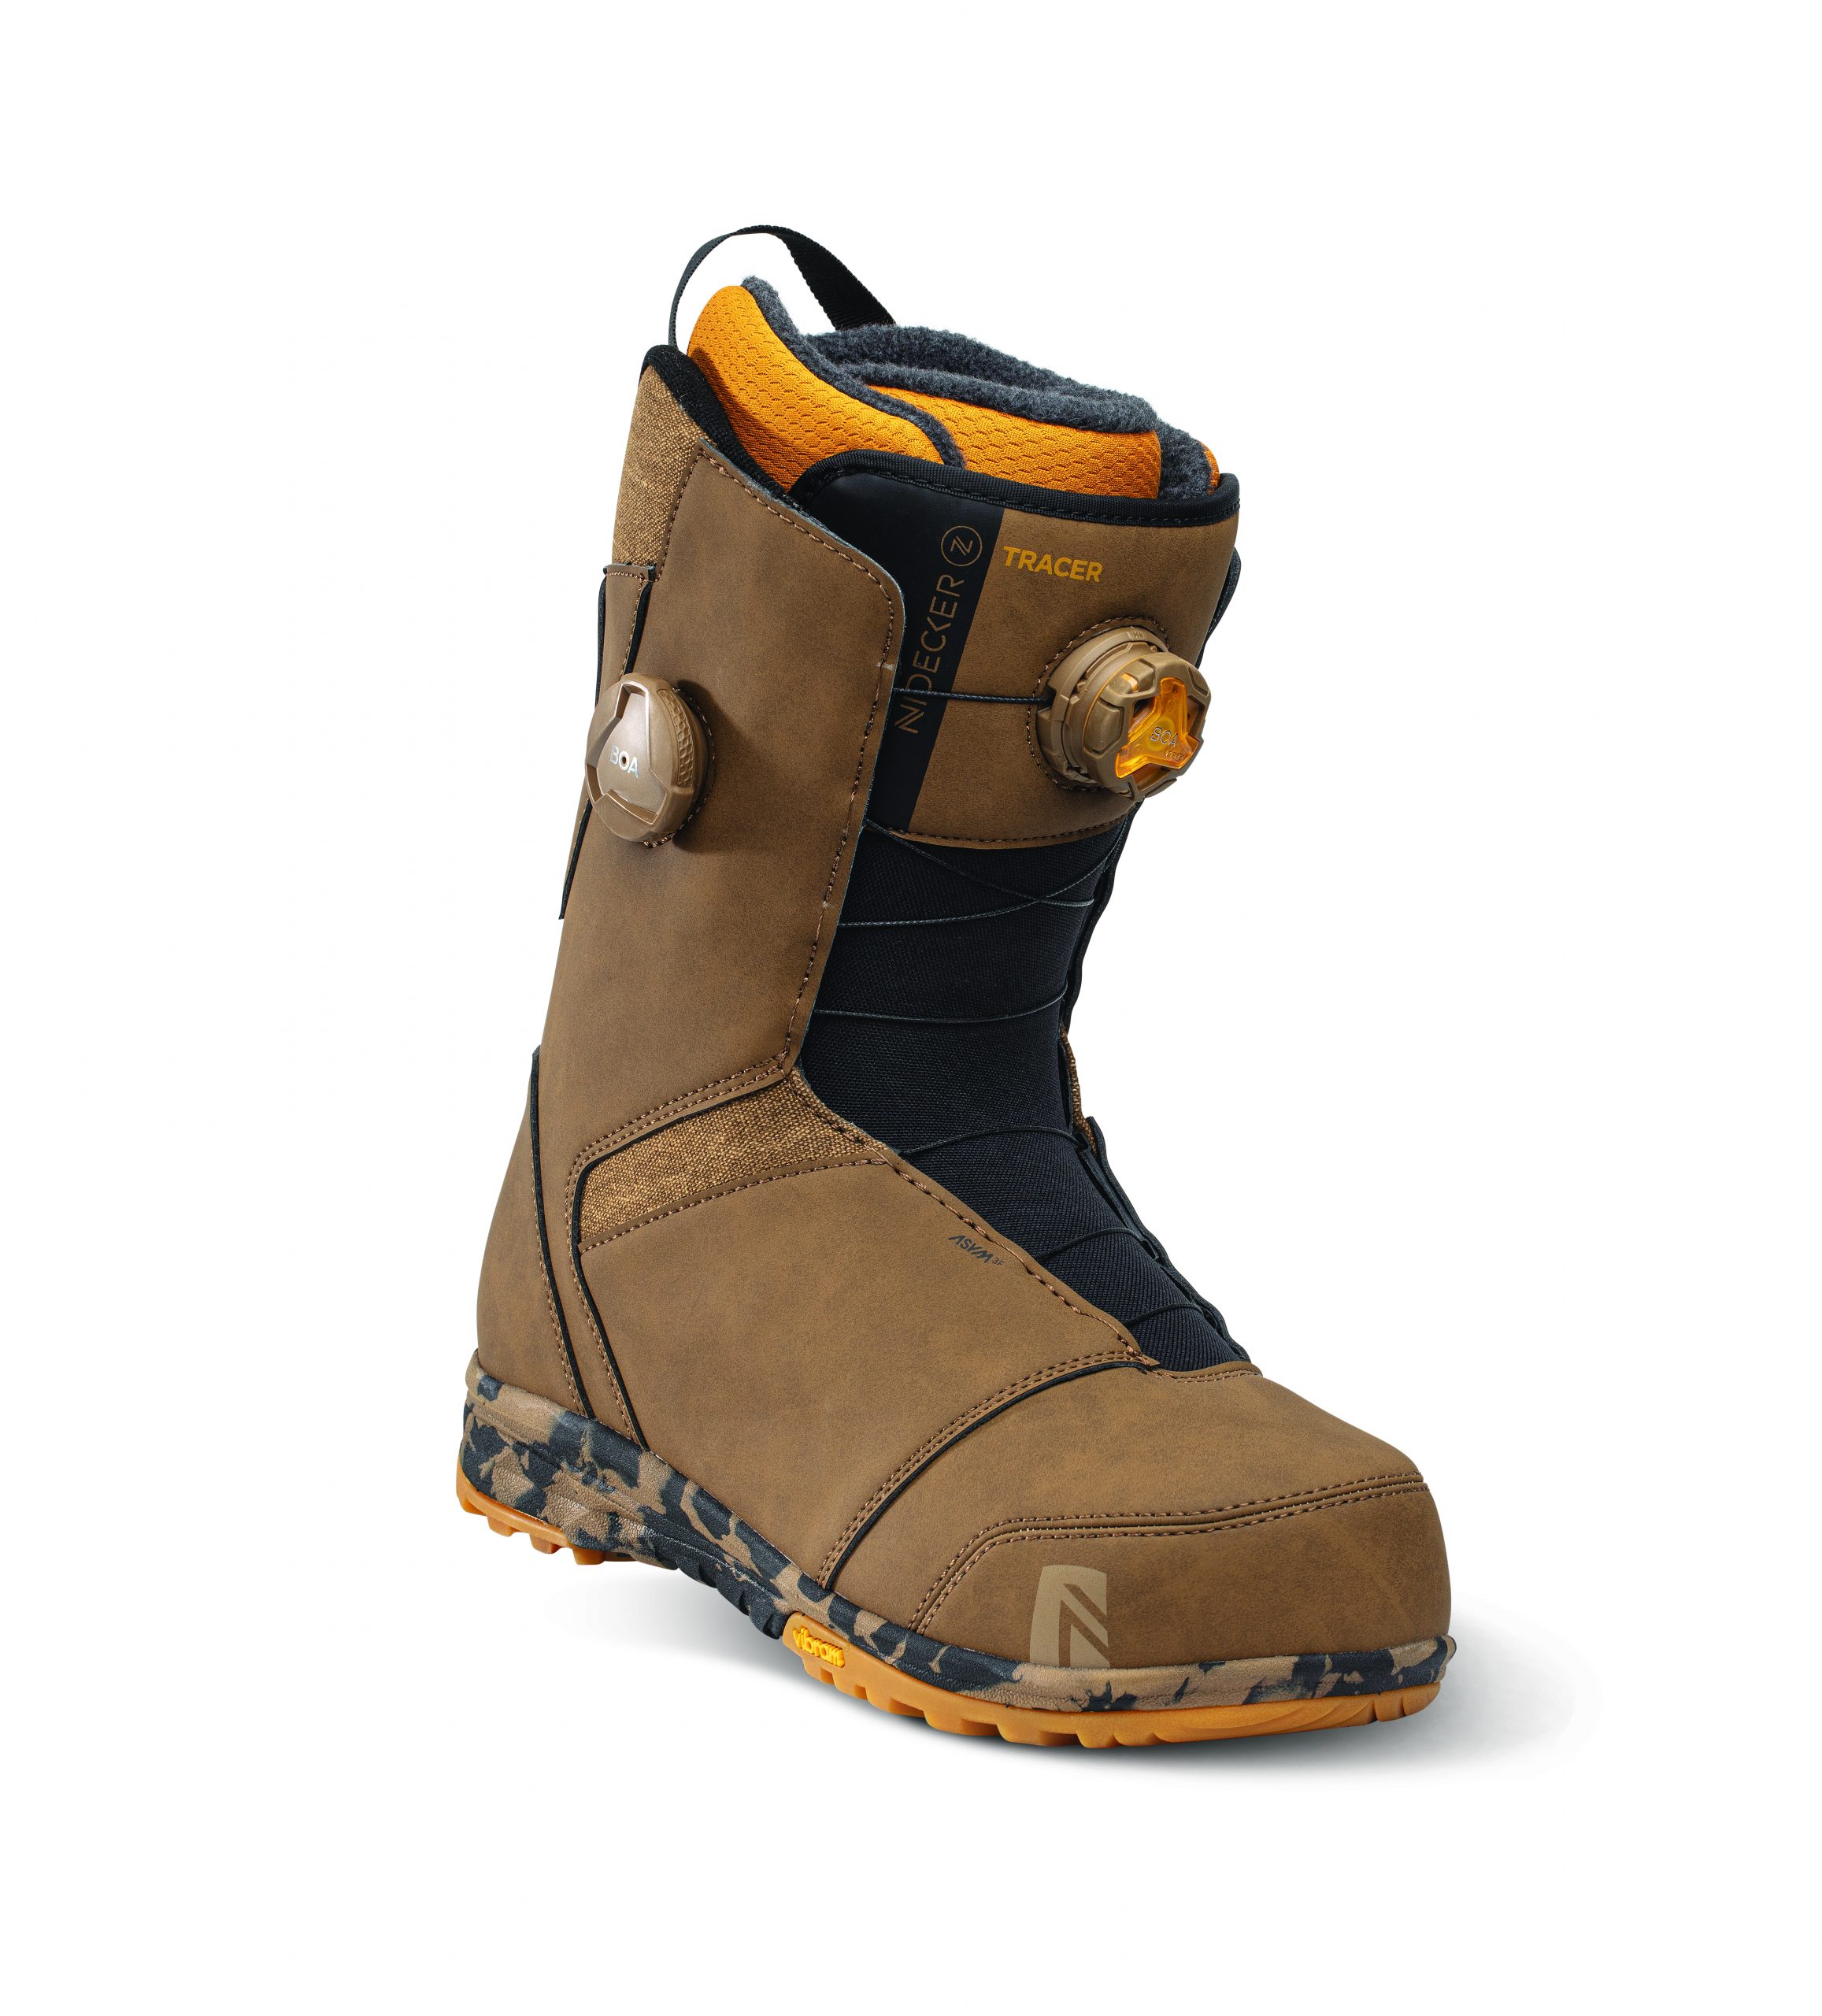 Nidecker FW20/21 Snowboard Boots